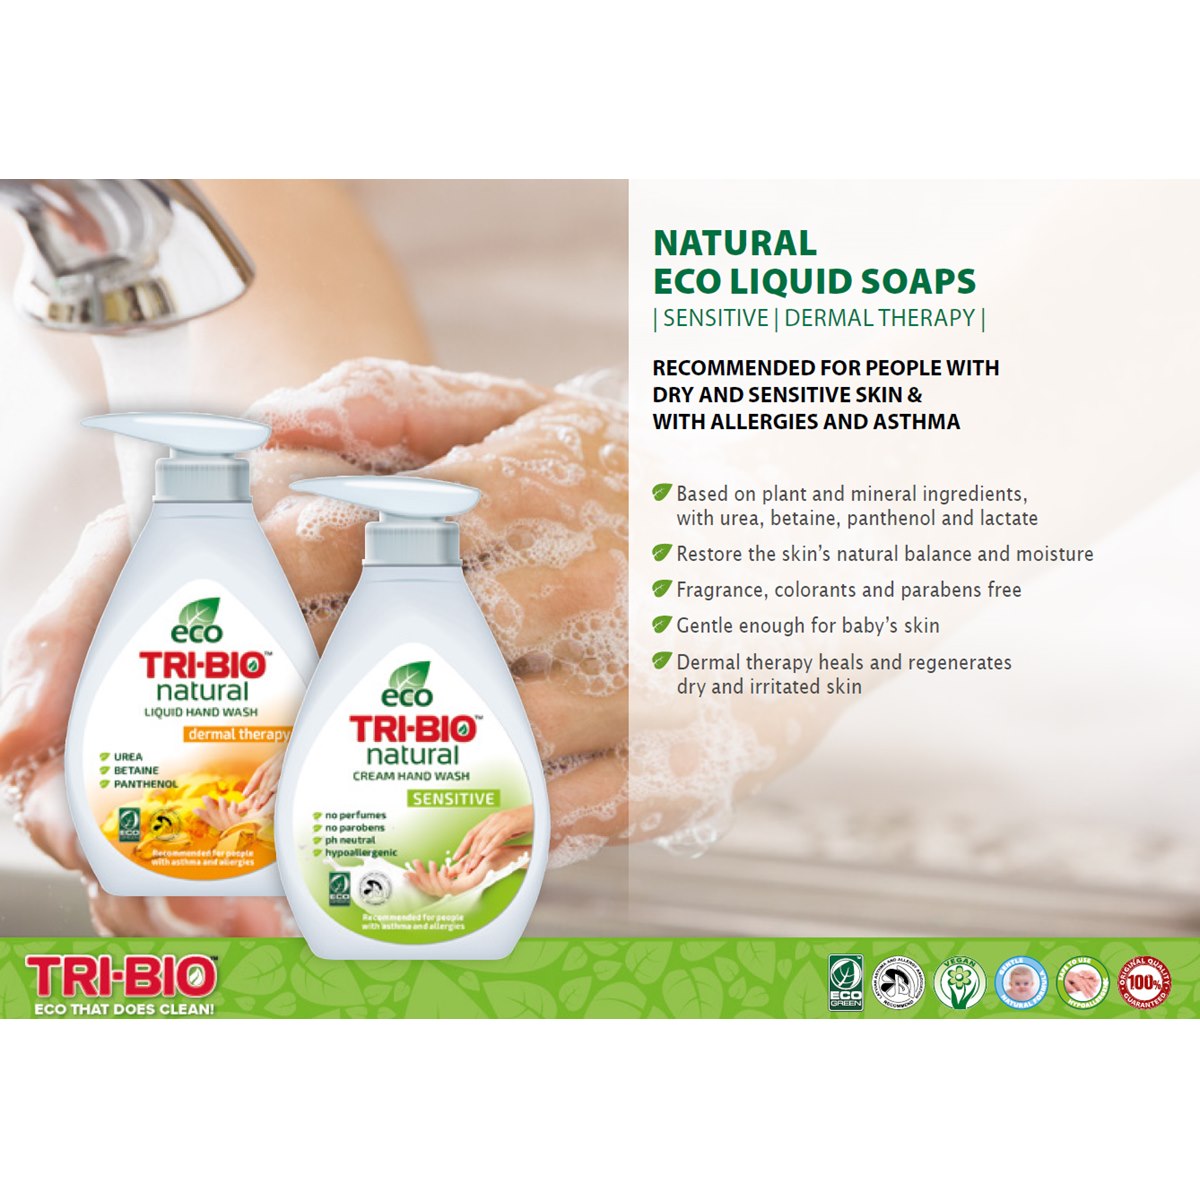 Tri-Bio Natural Eco Liquid Soaps